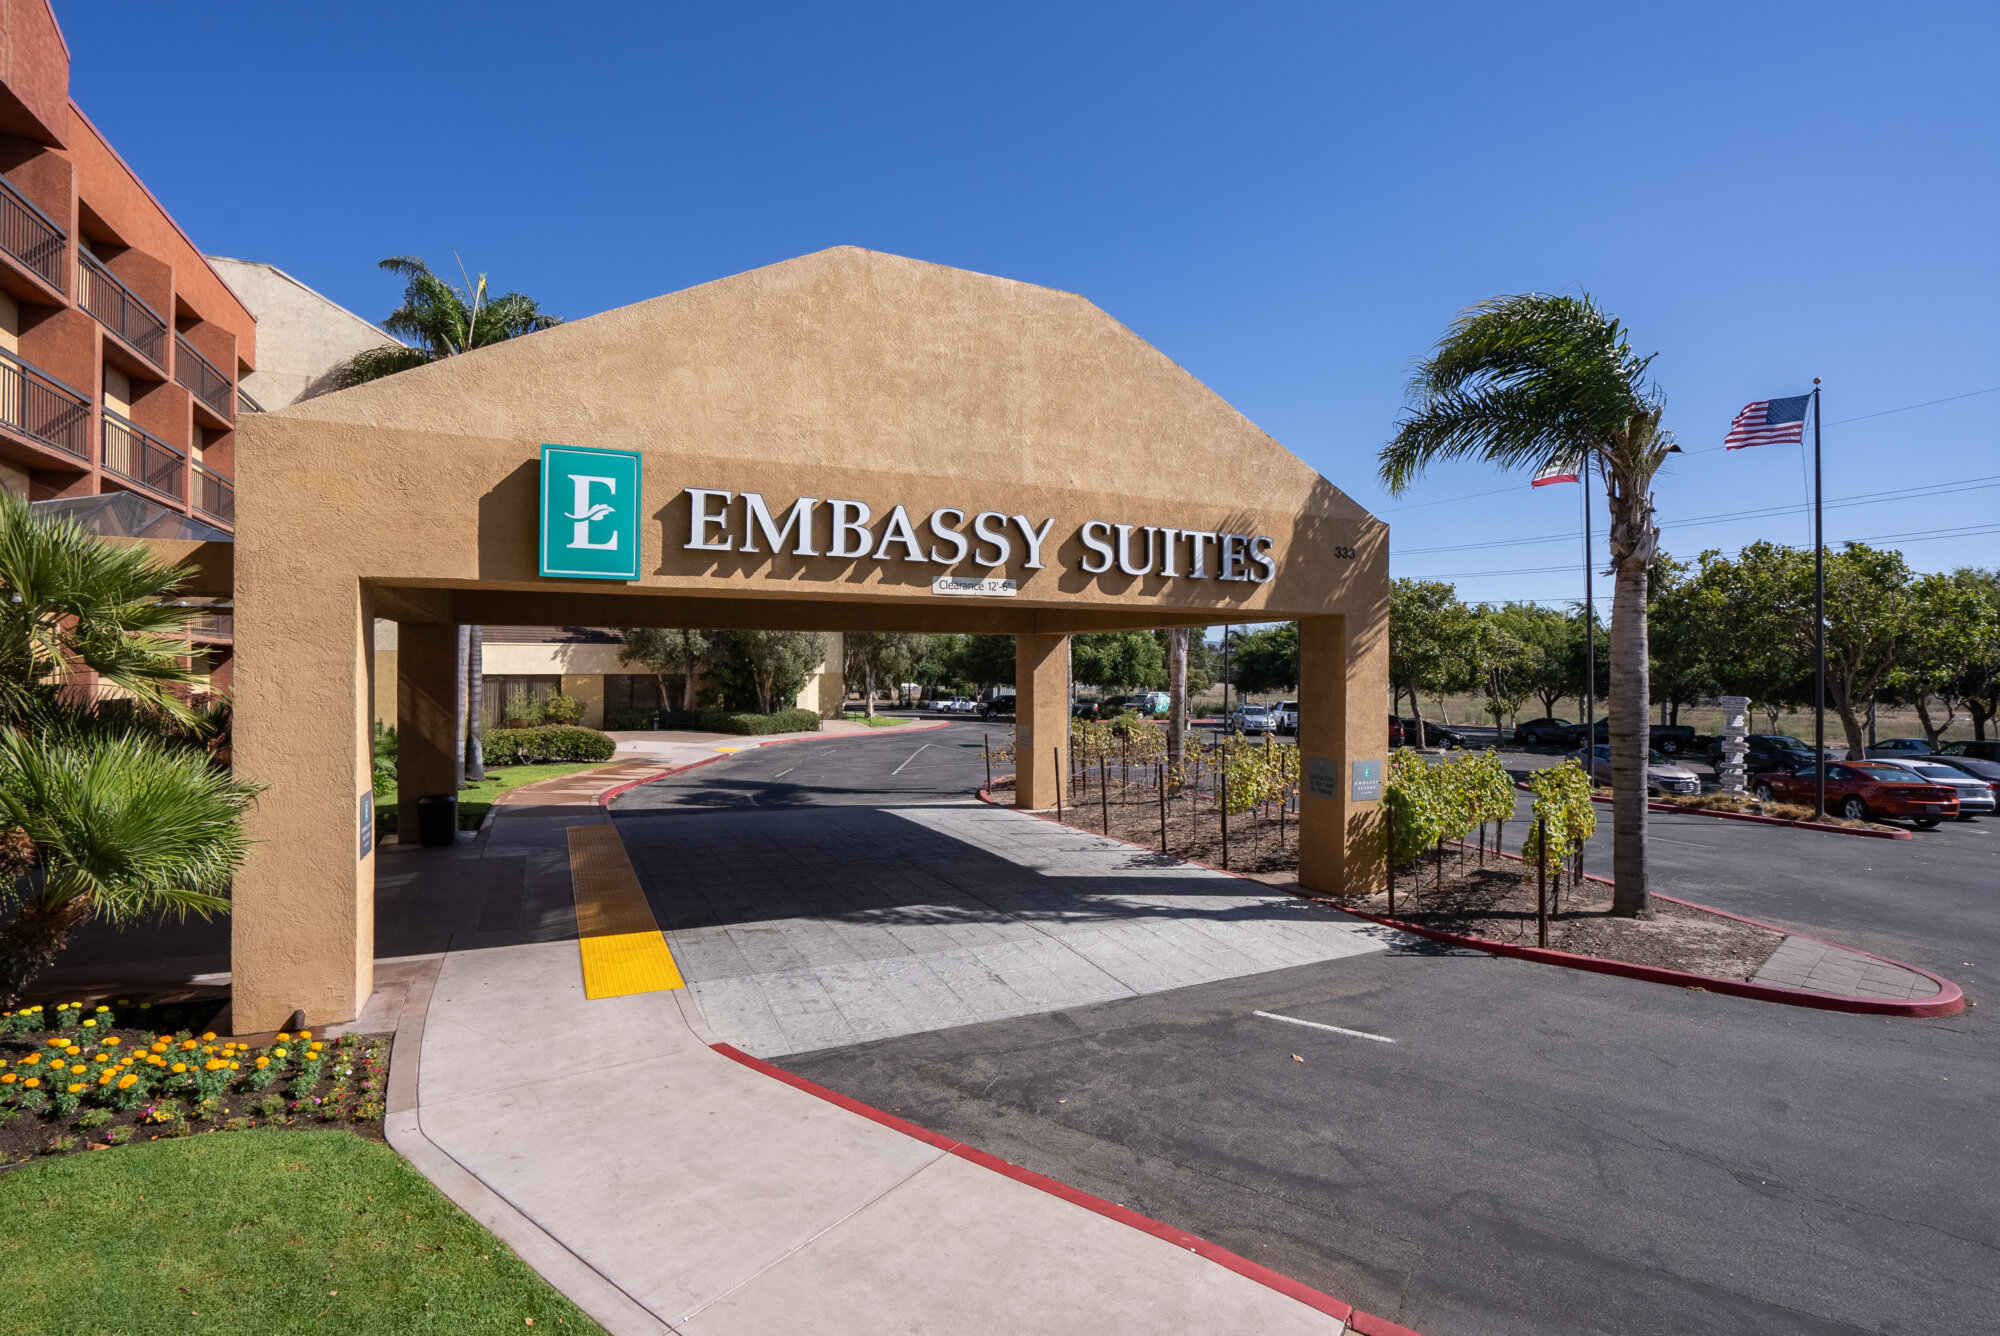 Embassy Suites Hotel | Robins & Morton